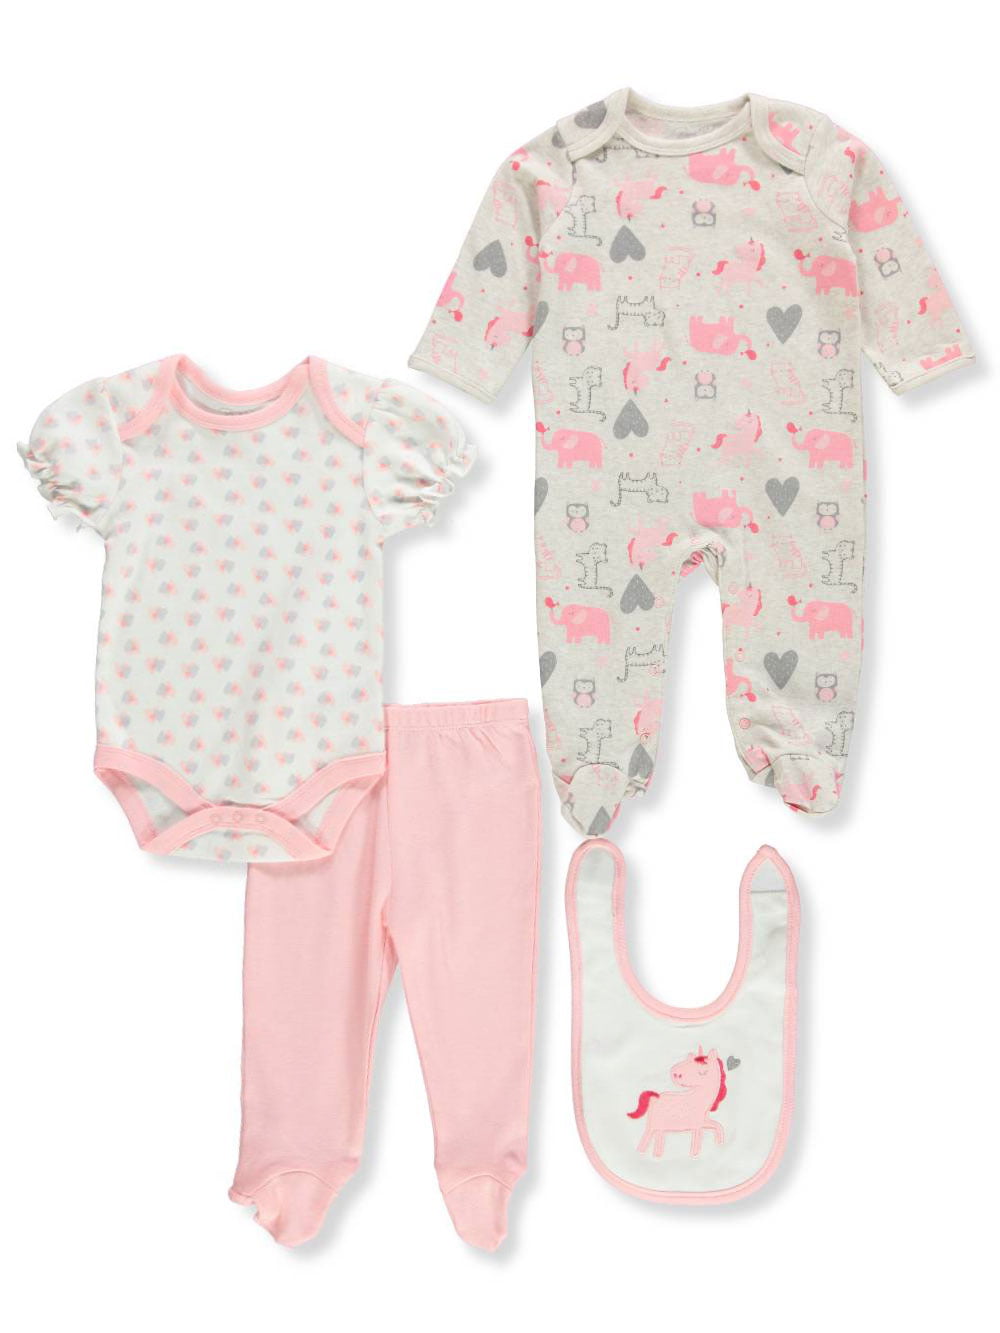 Rene Rofe Baby Clothing | Babies 0-24 